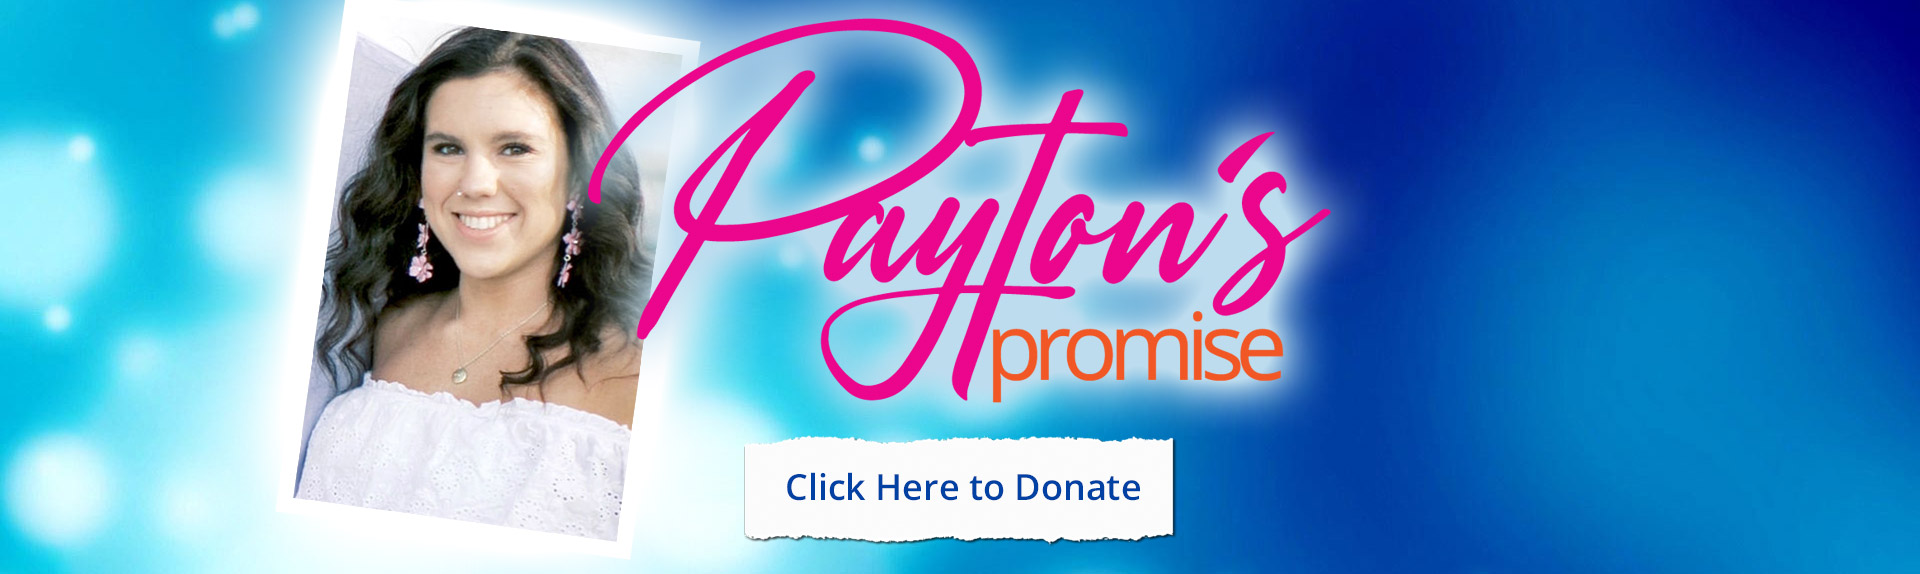 Payton's Promise Donate